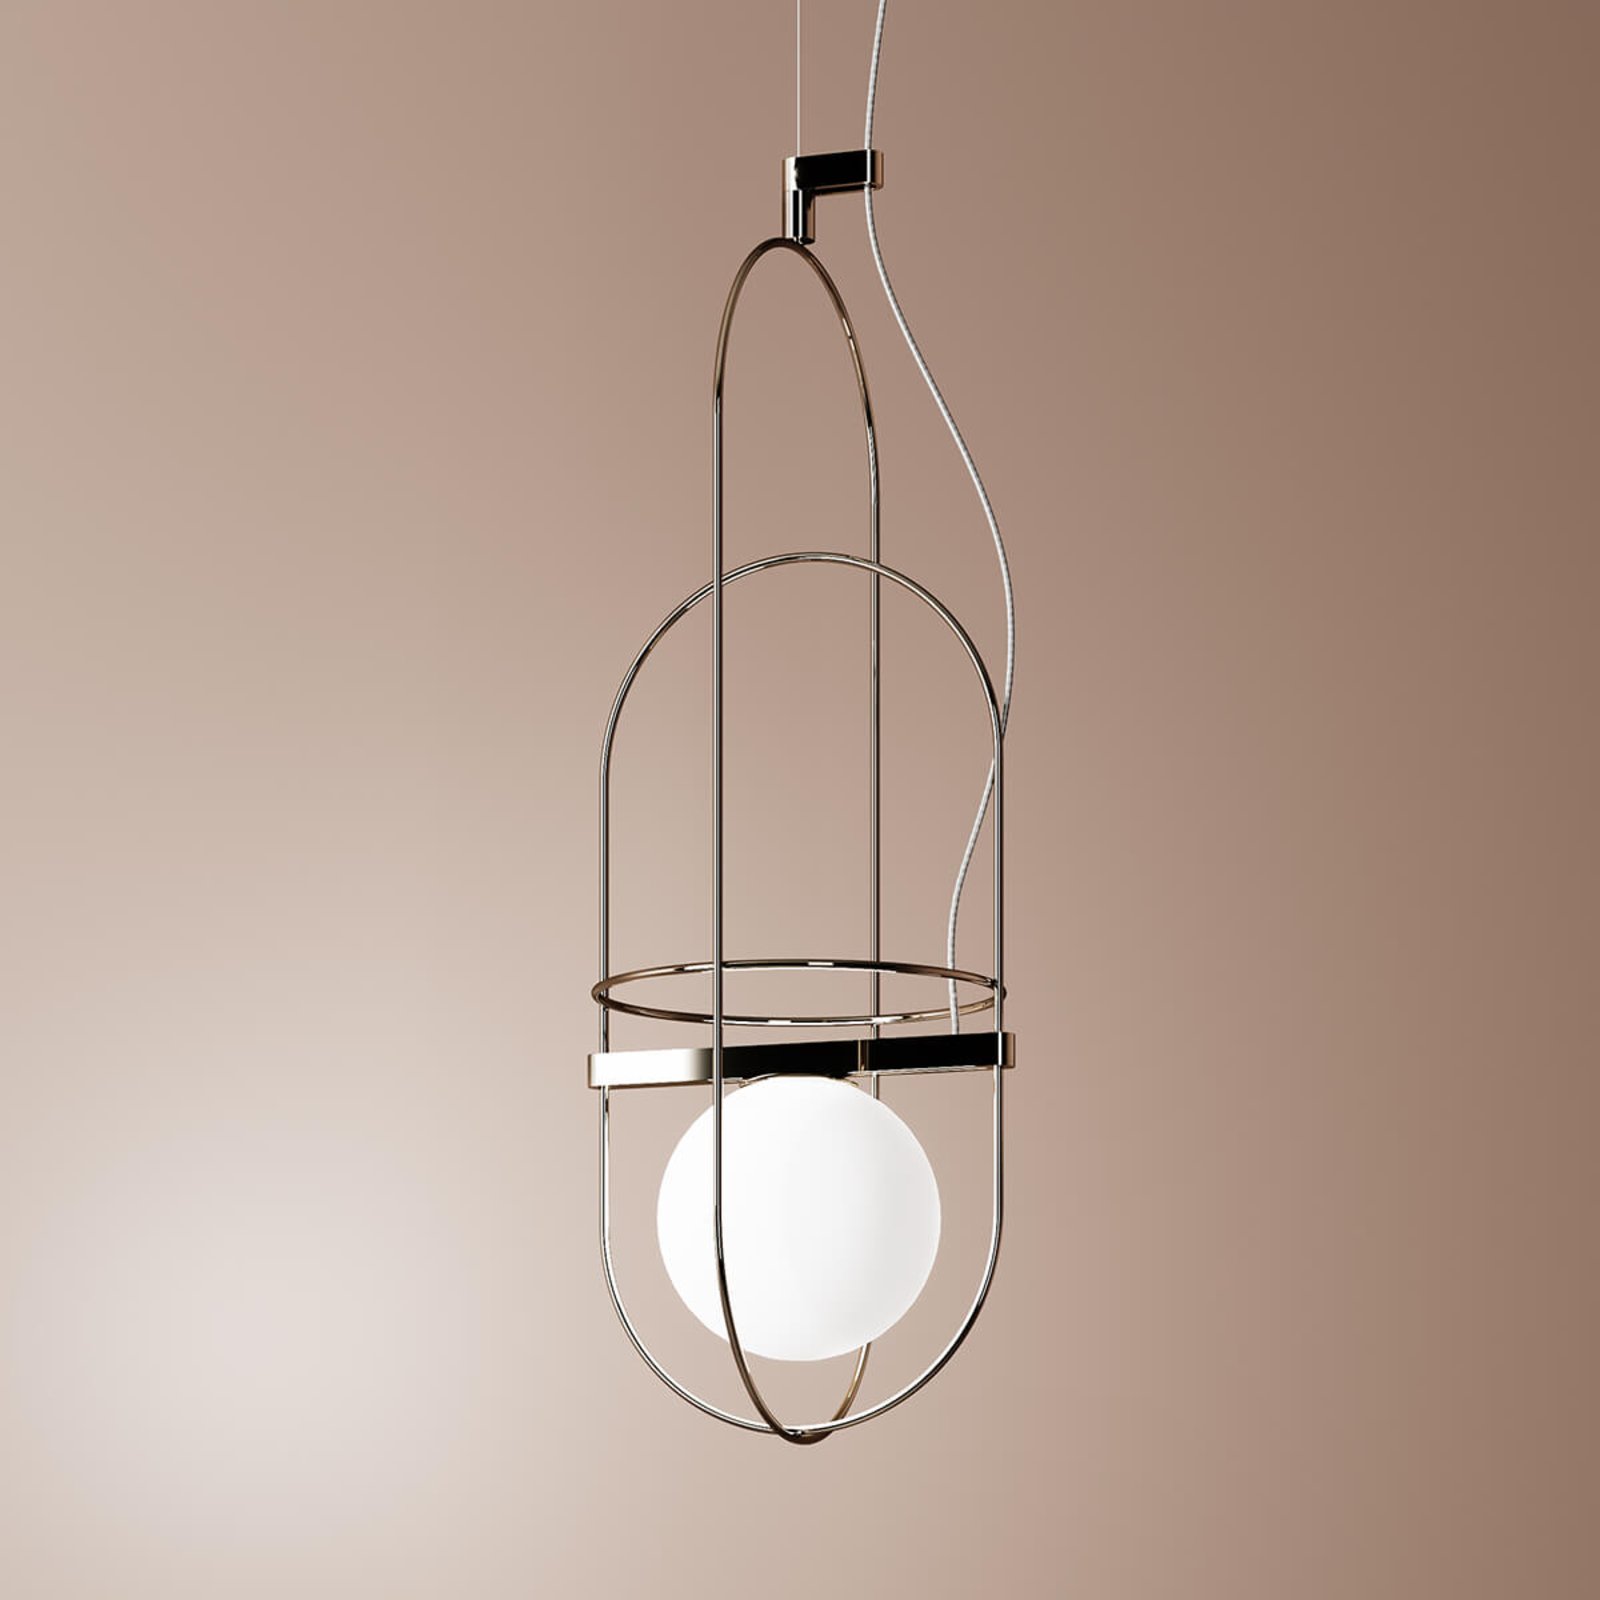 Delicate LED hanging light Setareh in chrome